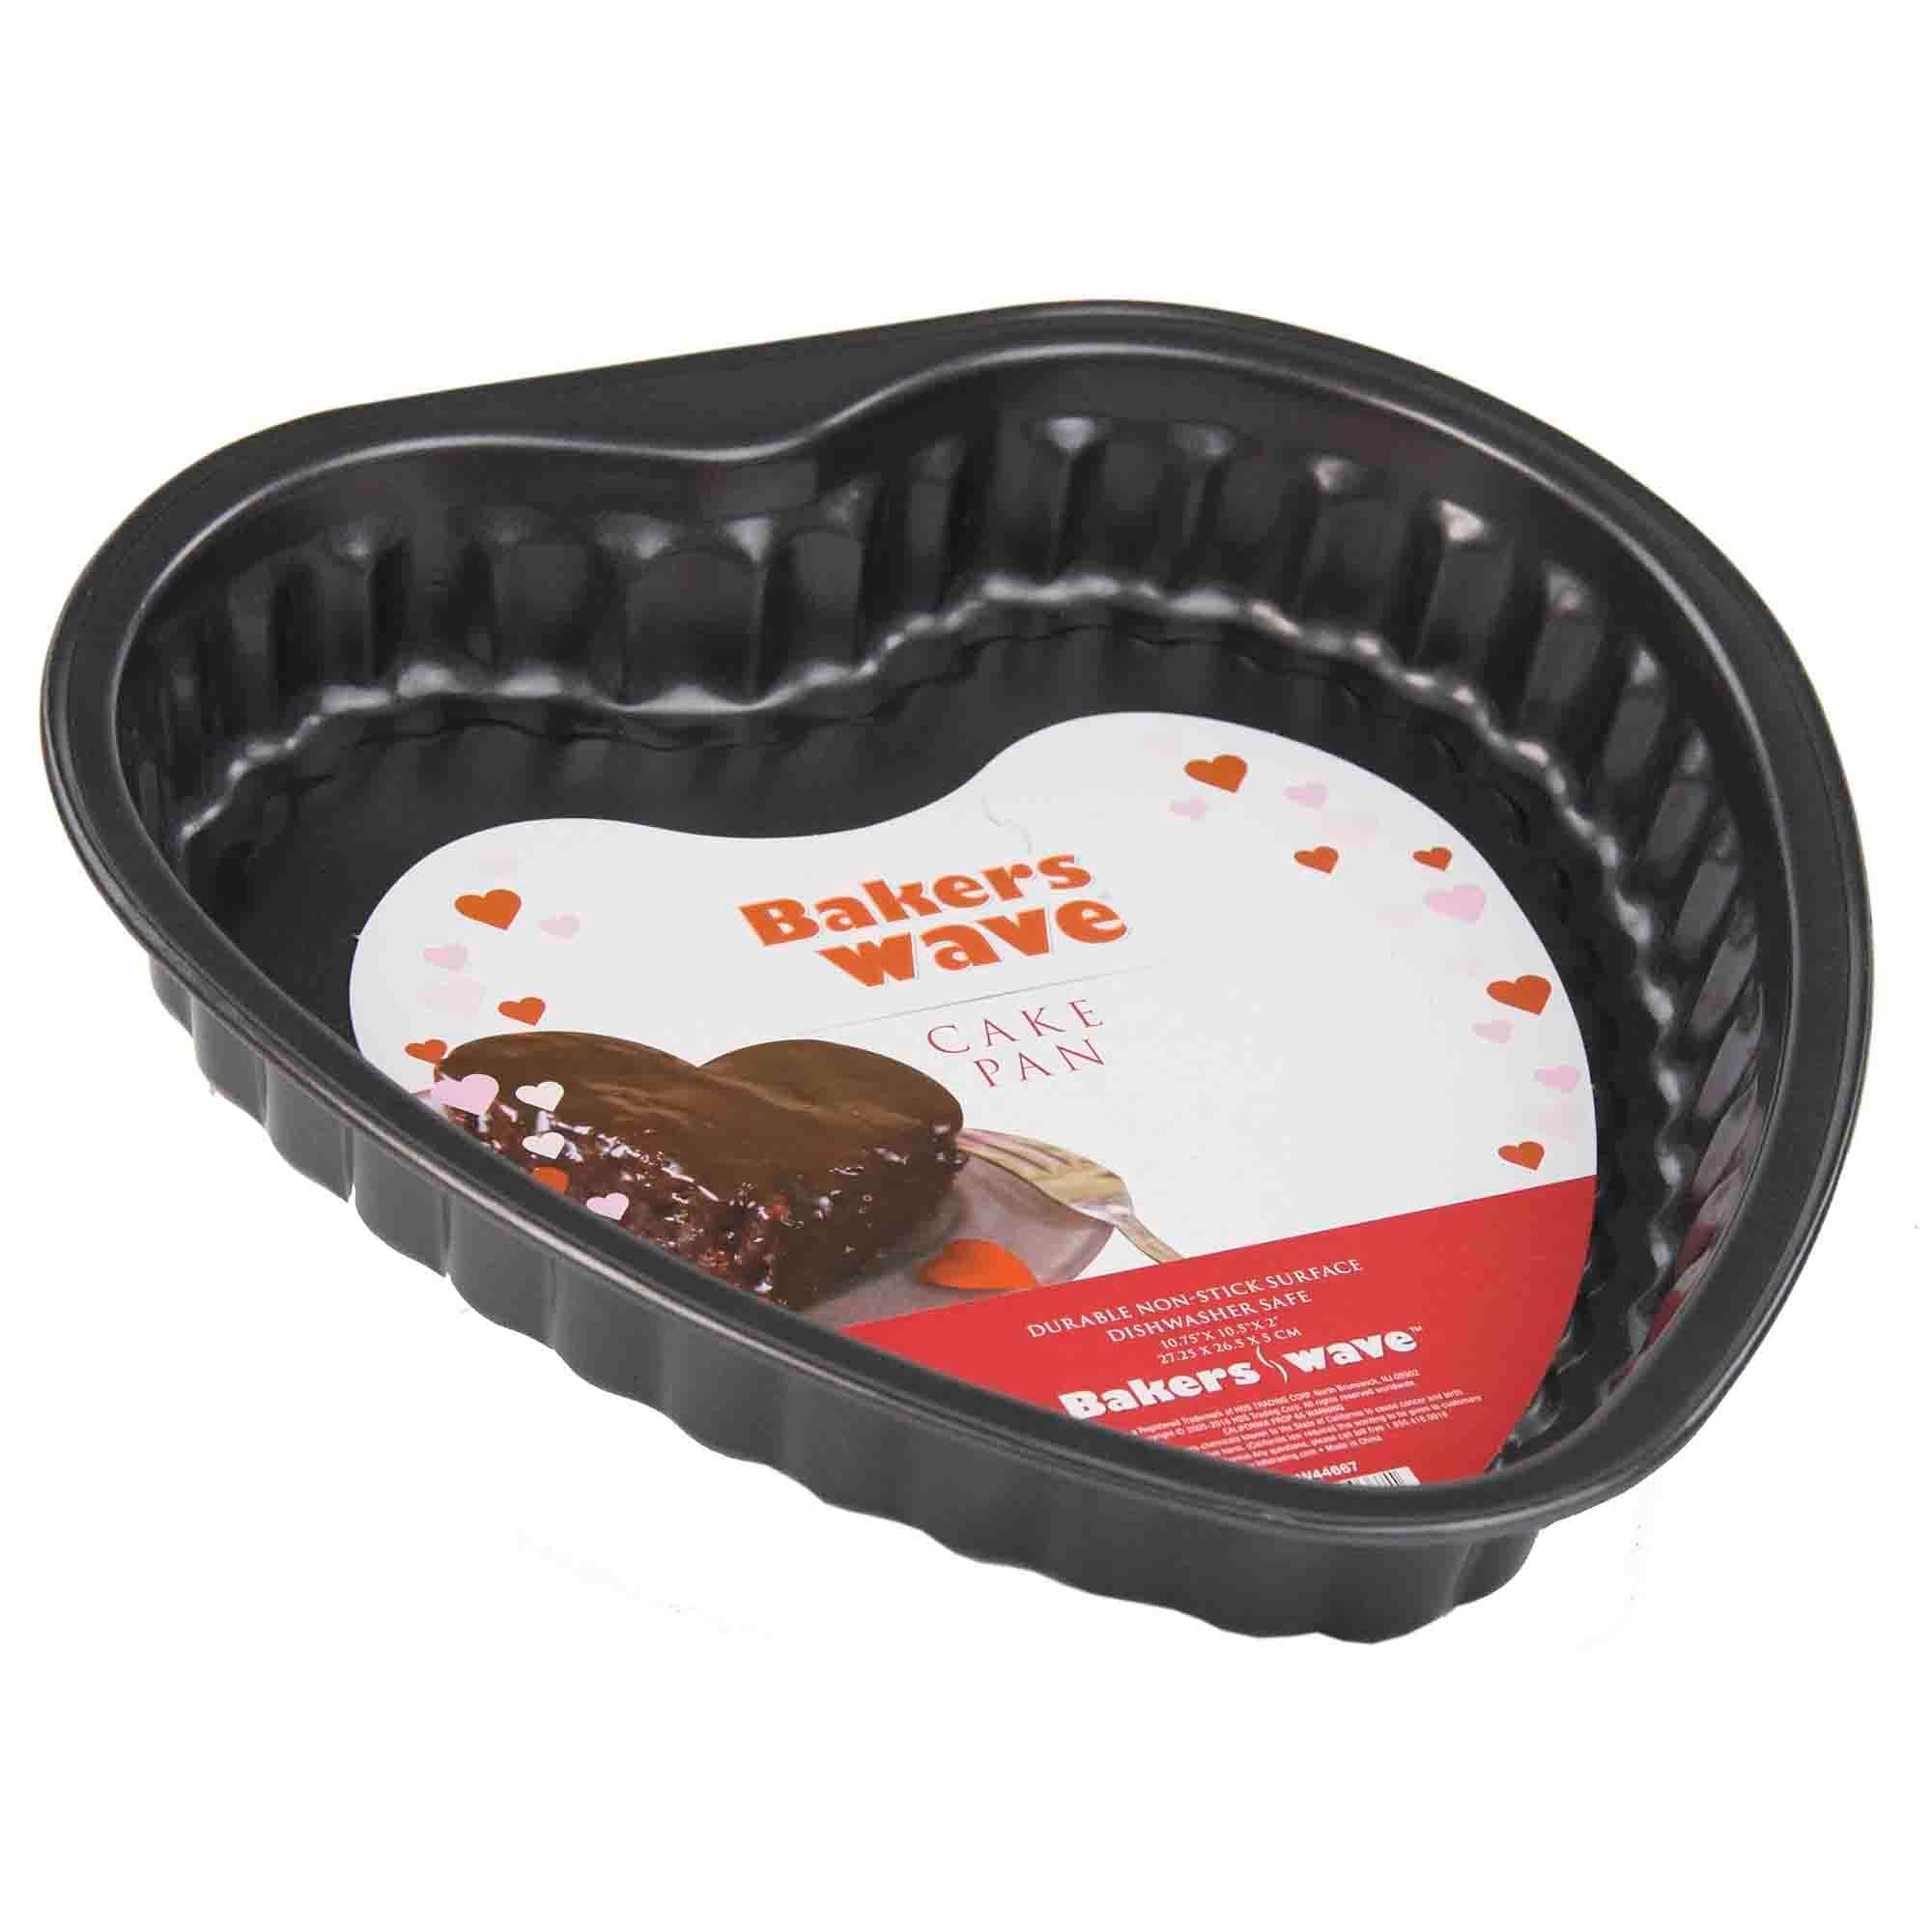 Heart-Shaped Cake Pan | FOOD PREP | SHOP HOME BASICS